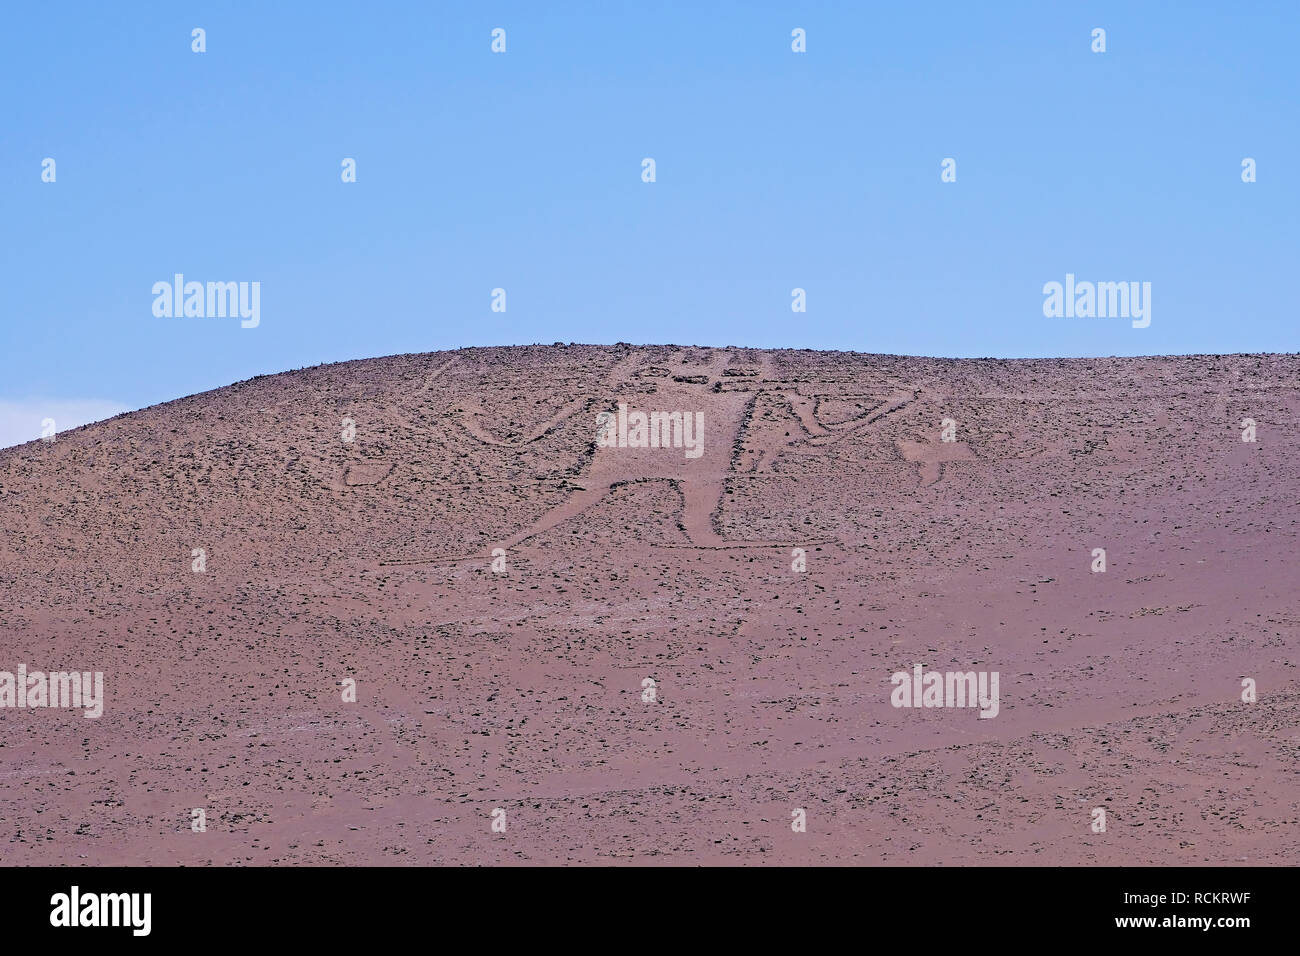 Giant Of The Atacama, Gigante De Tarapaca, large petroglyph on a rocky outcrop in the Atacama Desert, Tarapaca Region, northern Chile Stock Photo